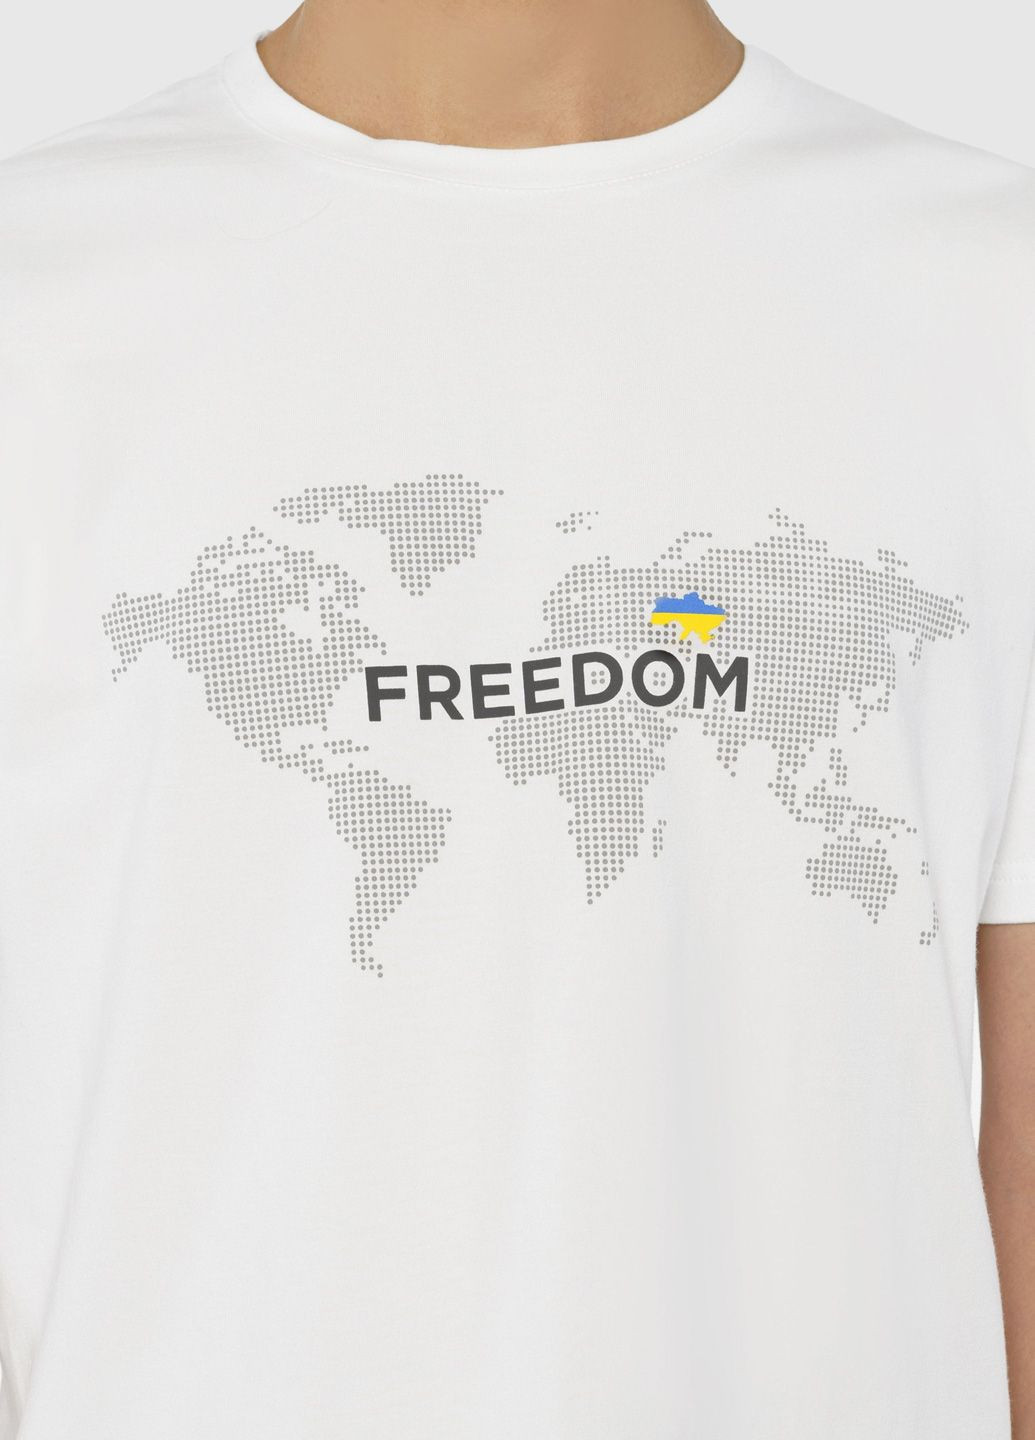 Біла футболка унісекс freedom біла Arber T-SHIRT FF19